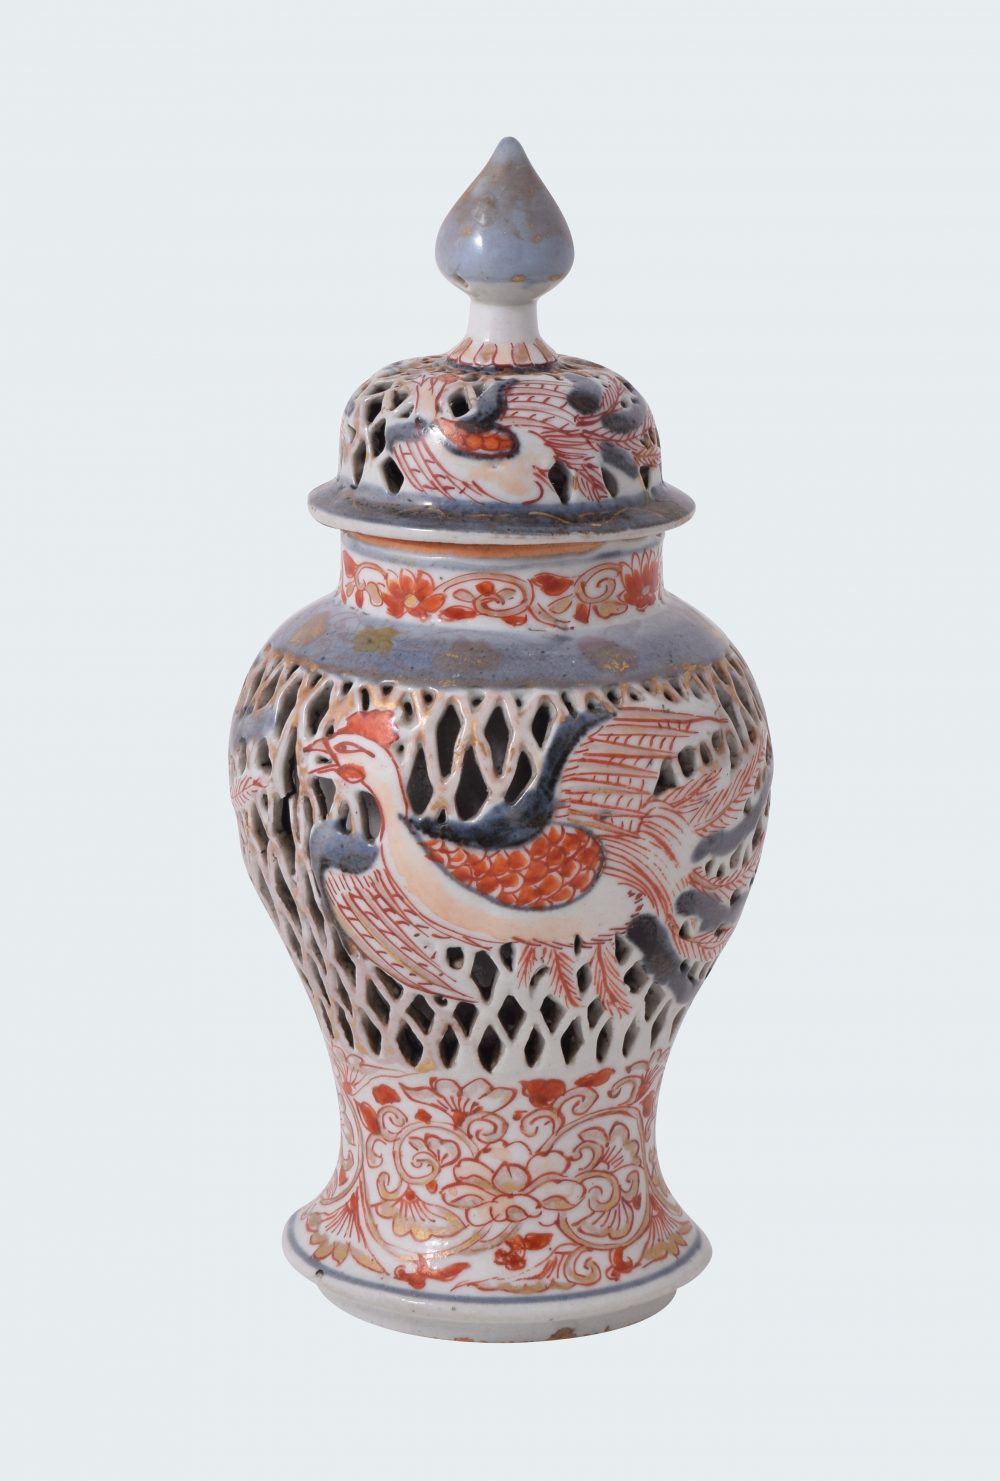 Porcelaine Edo (1603-1868), circa 1700, Japon